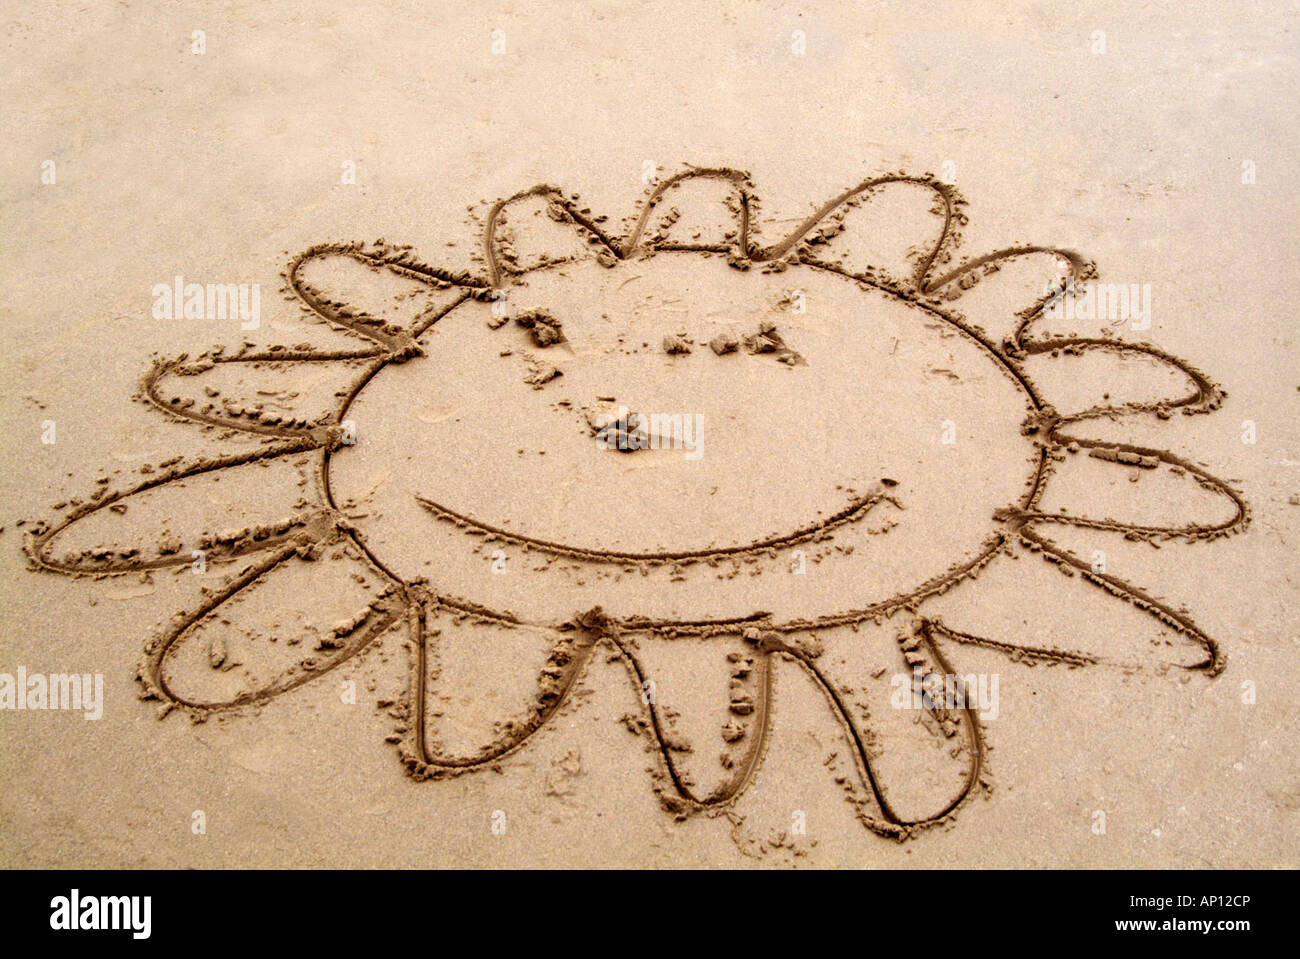 Sun shine sand beach cartoon hi-res stock photography and images - Alamy